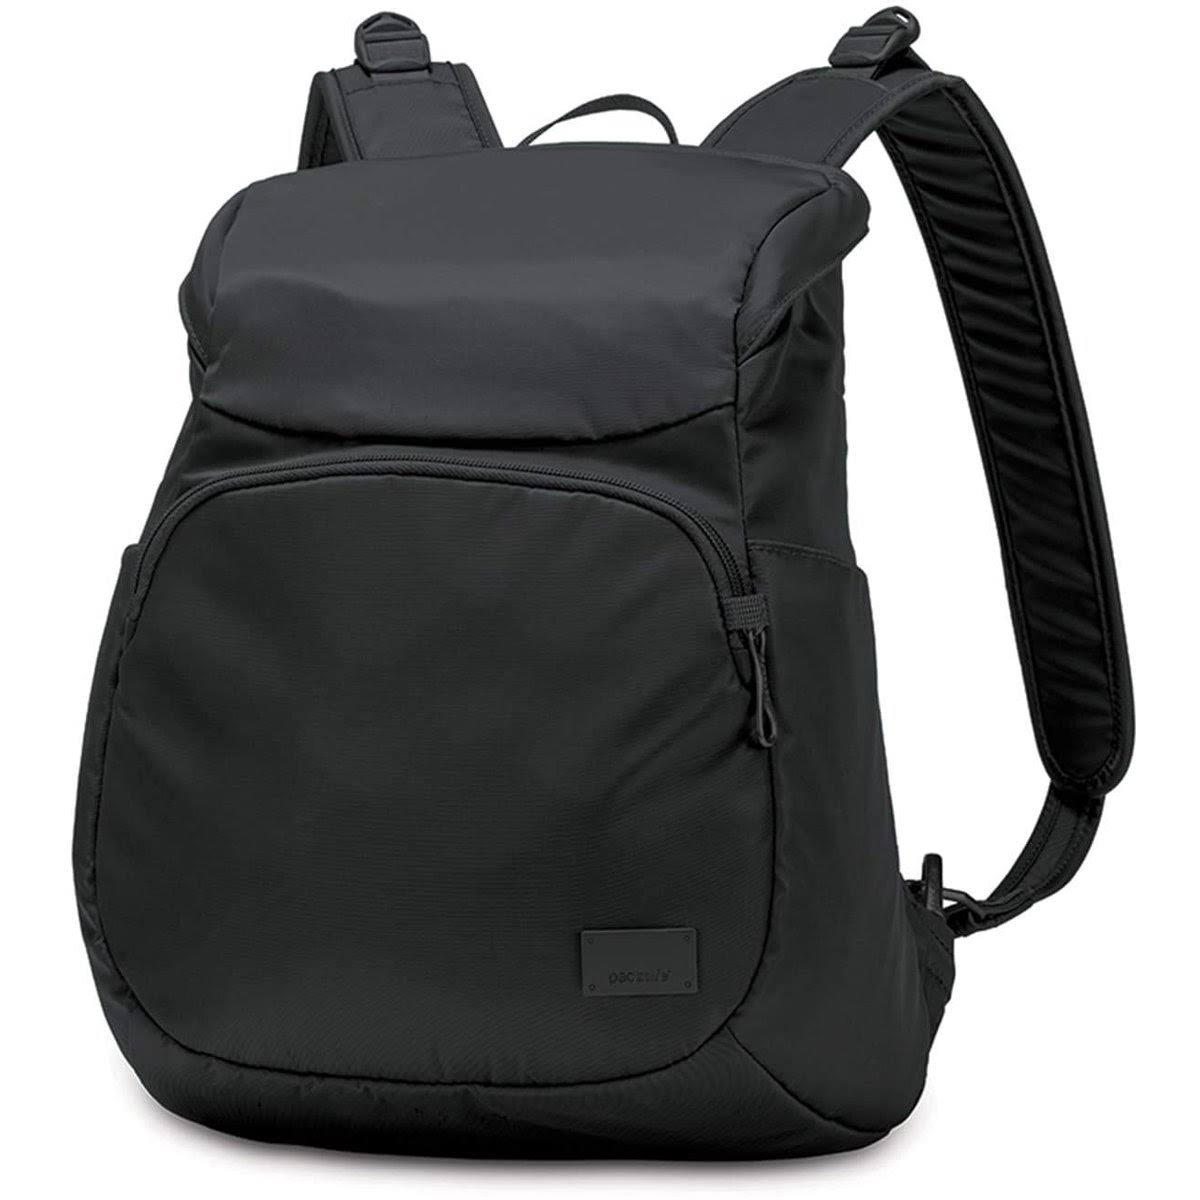 PacSafe: Citysafe CS350 Anti-Theft Backpack - Black - My Leather Swear